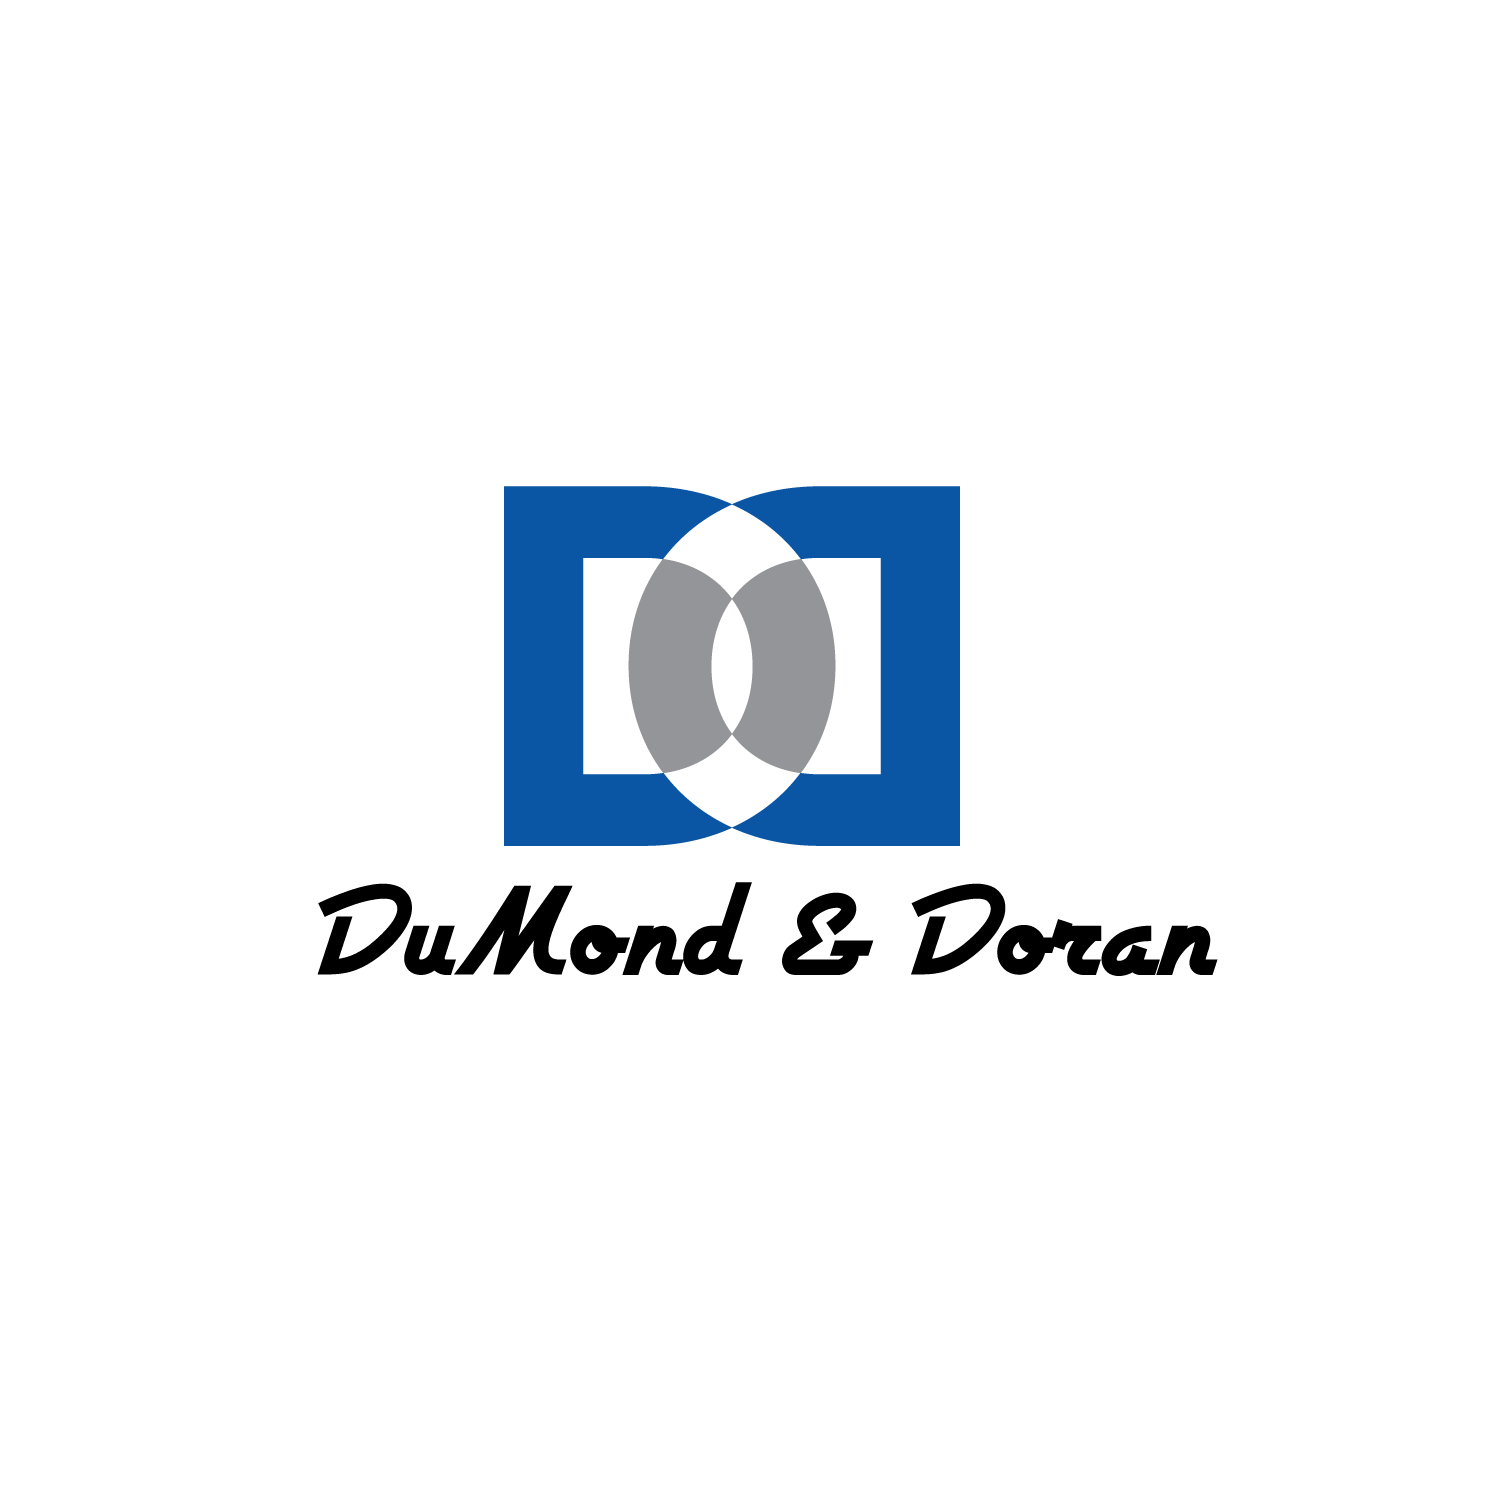 Doran Logo - Professional, Modern, Legal Logo Design for DuMond & Doran